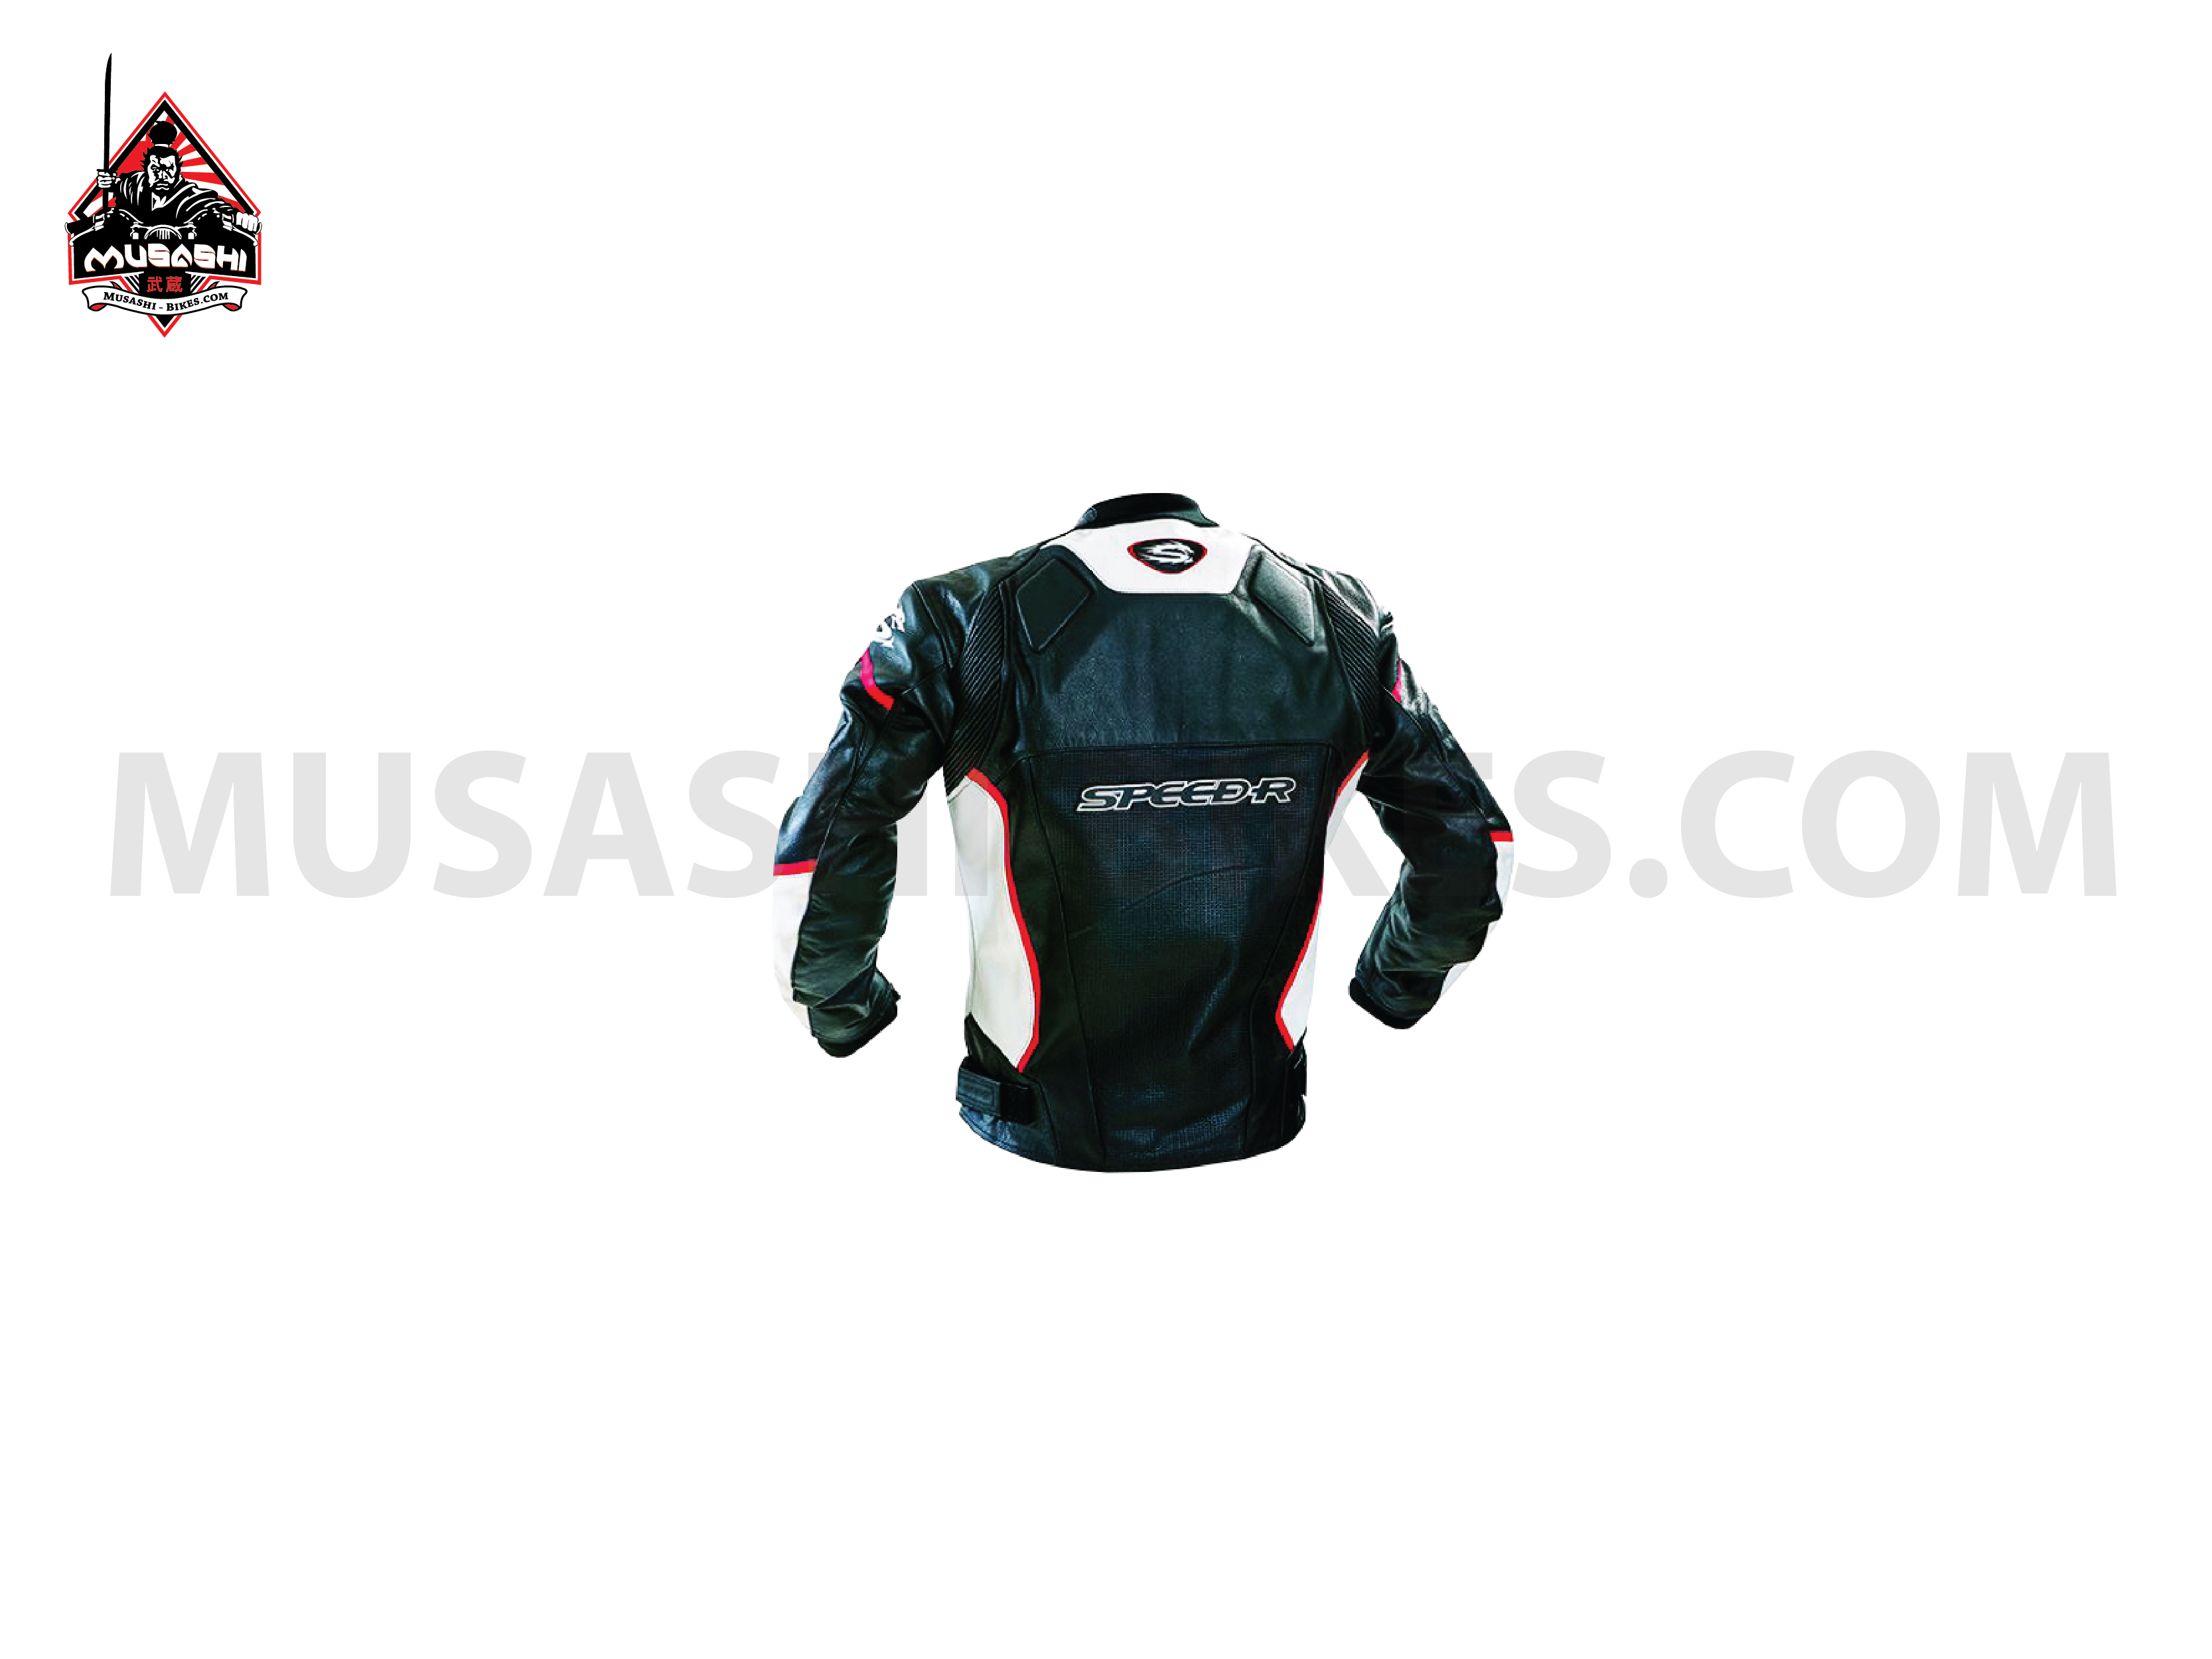 Men's Leather Racing Jacket - S23